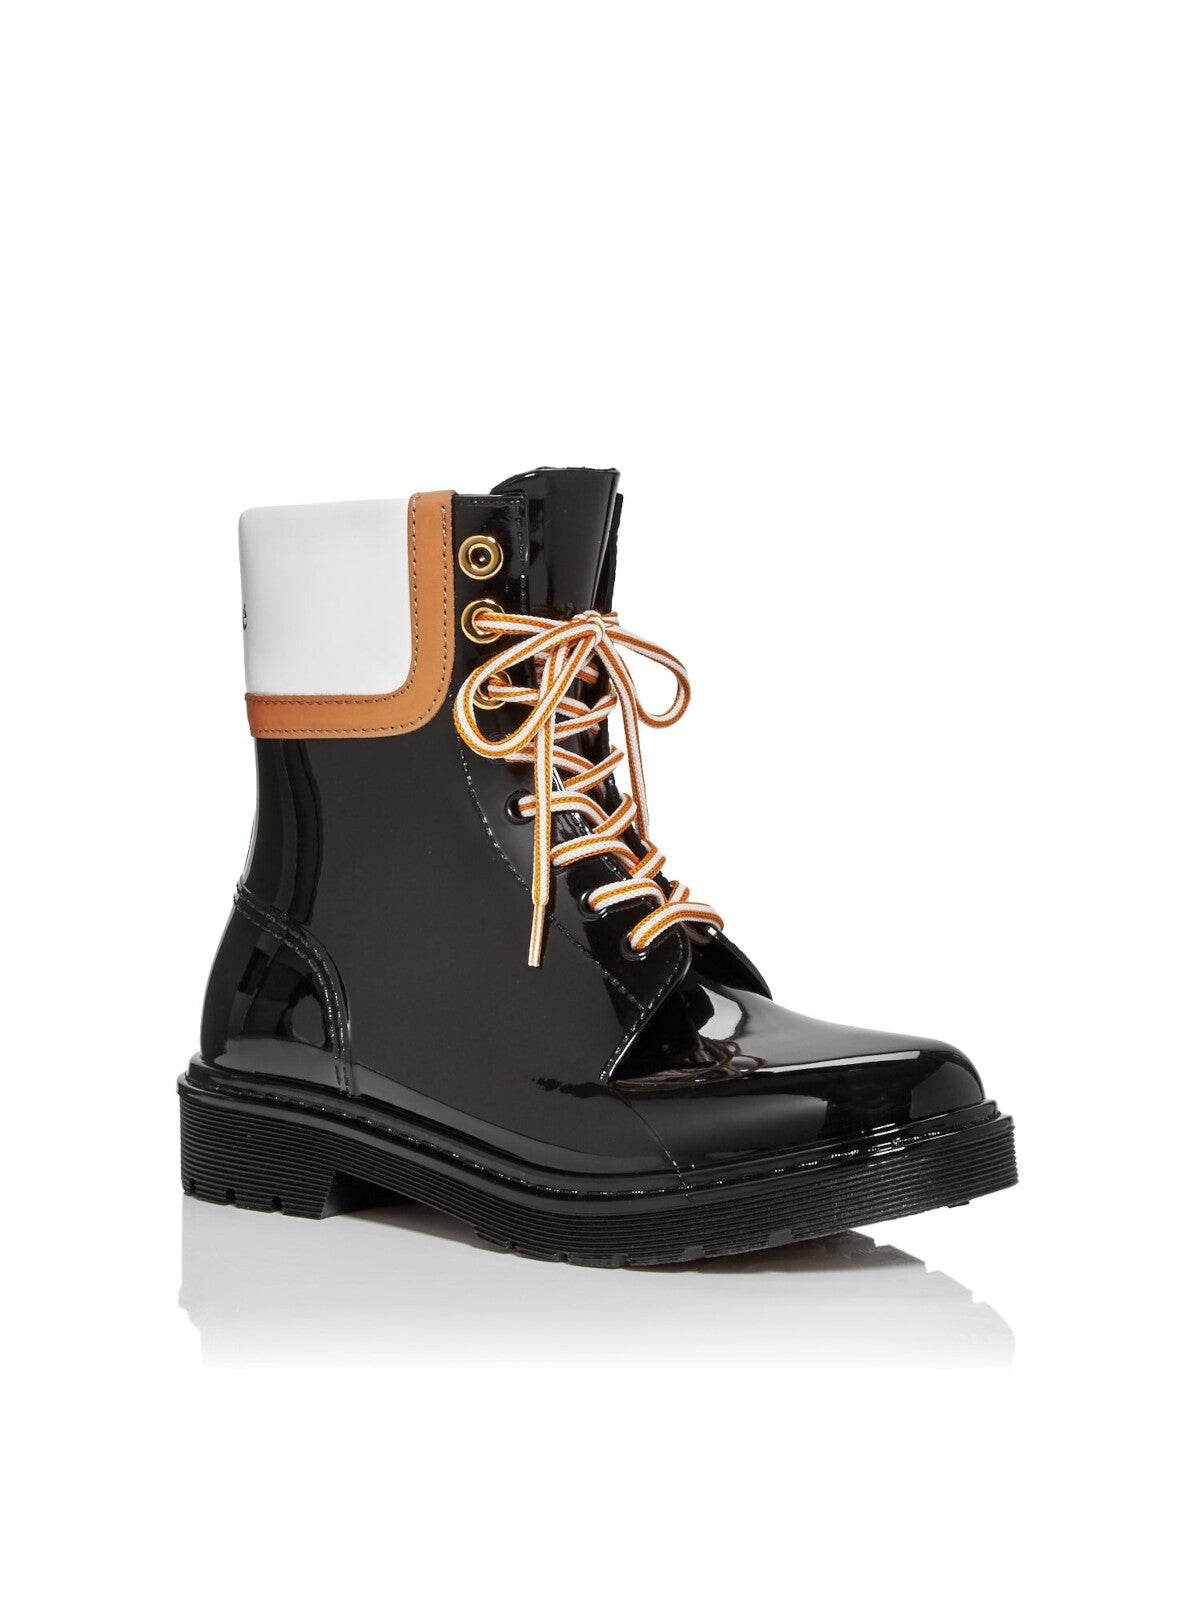 SEE BY CHLOE Womens Black Color Block Waterproof Padded Florrie Round Toe Block Heel Lace-Up Rain Boots 37